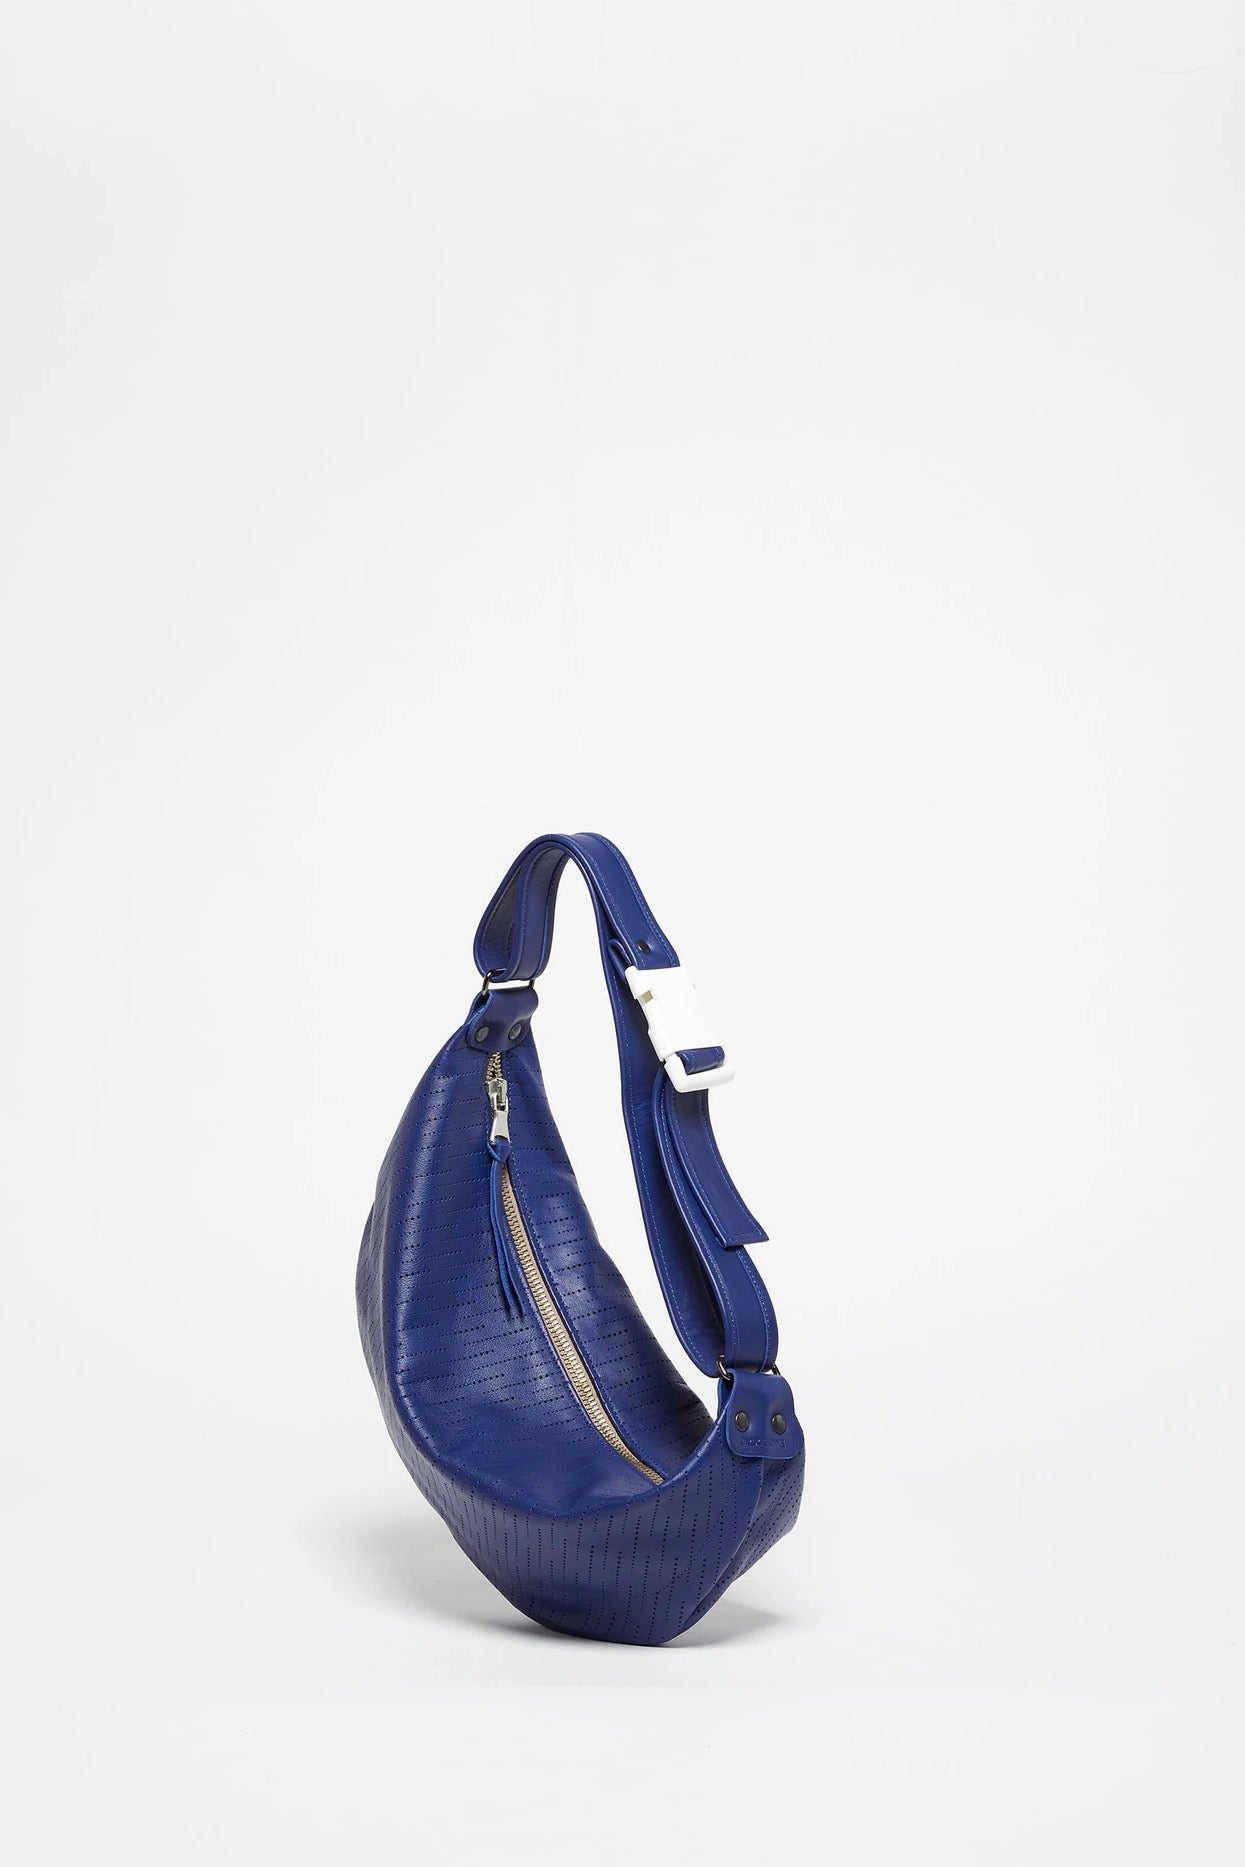 Jack Gomme- Elle Moon Bag: Natical Blue – ouimillie